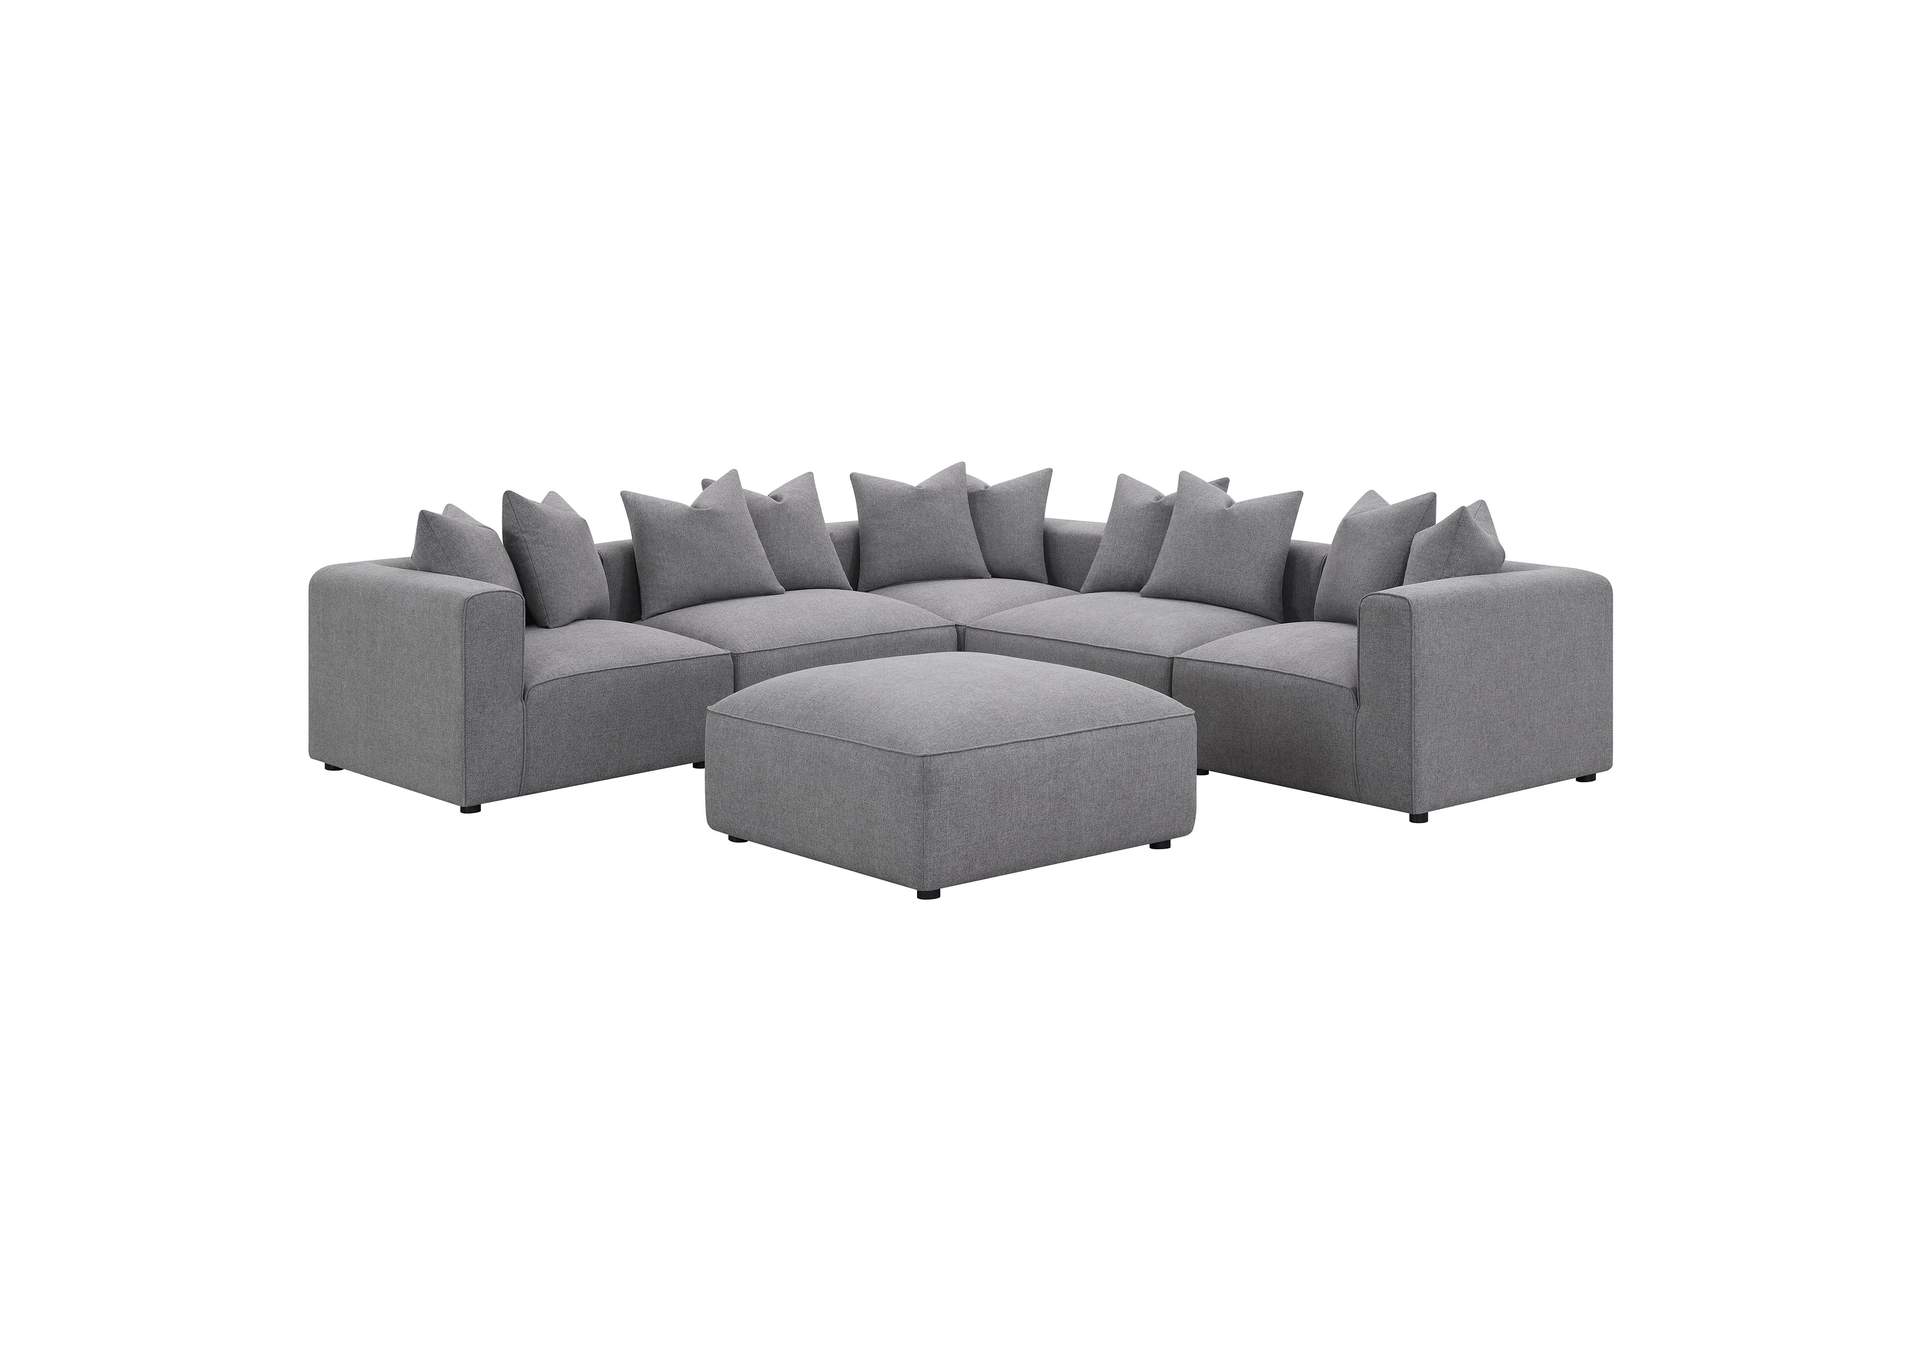 Jennifer Square Upholstered Ottoman Grey,Coaster Furniture